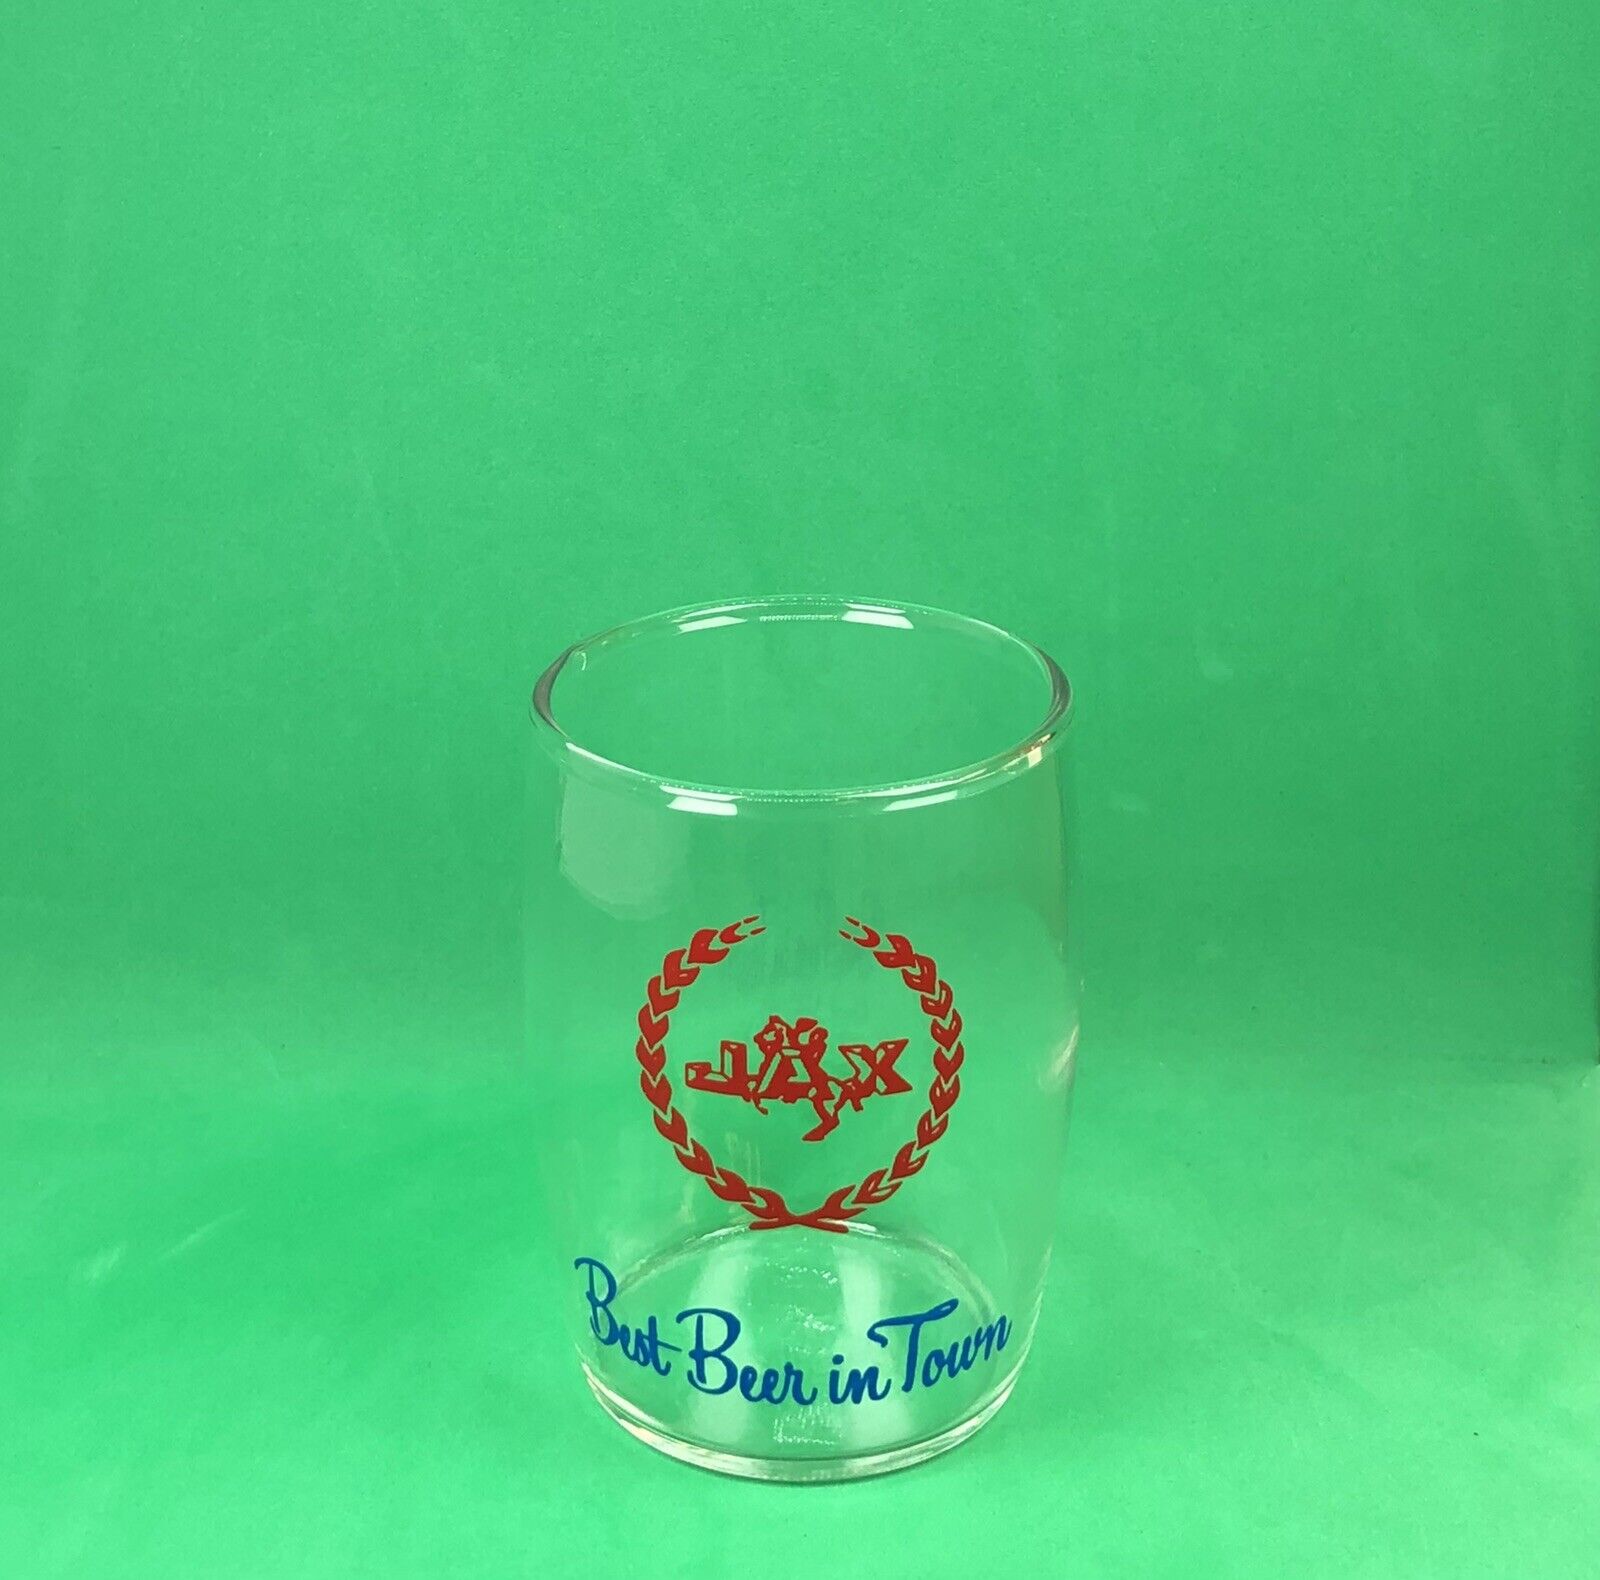 Jax Beer Glass / New Orleans Collectibles / Vintage Tavern Advertising / Barware